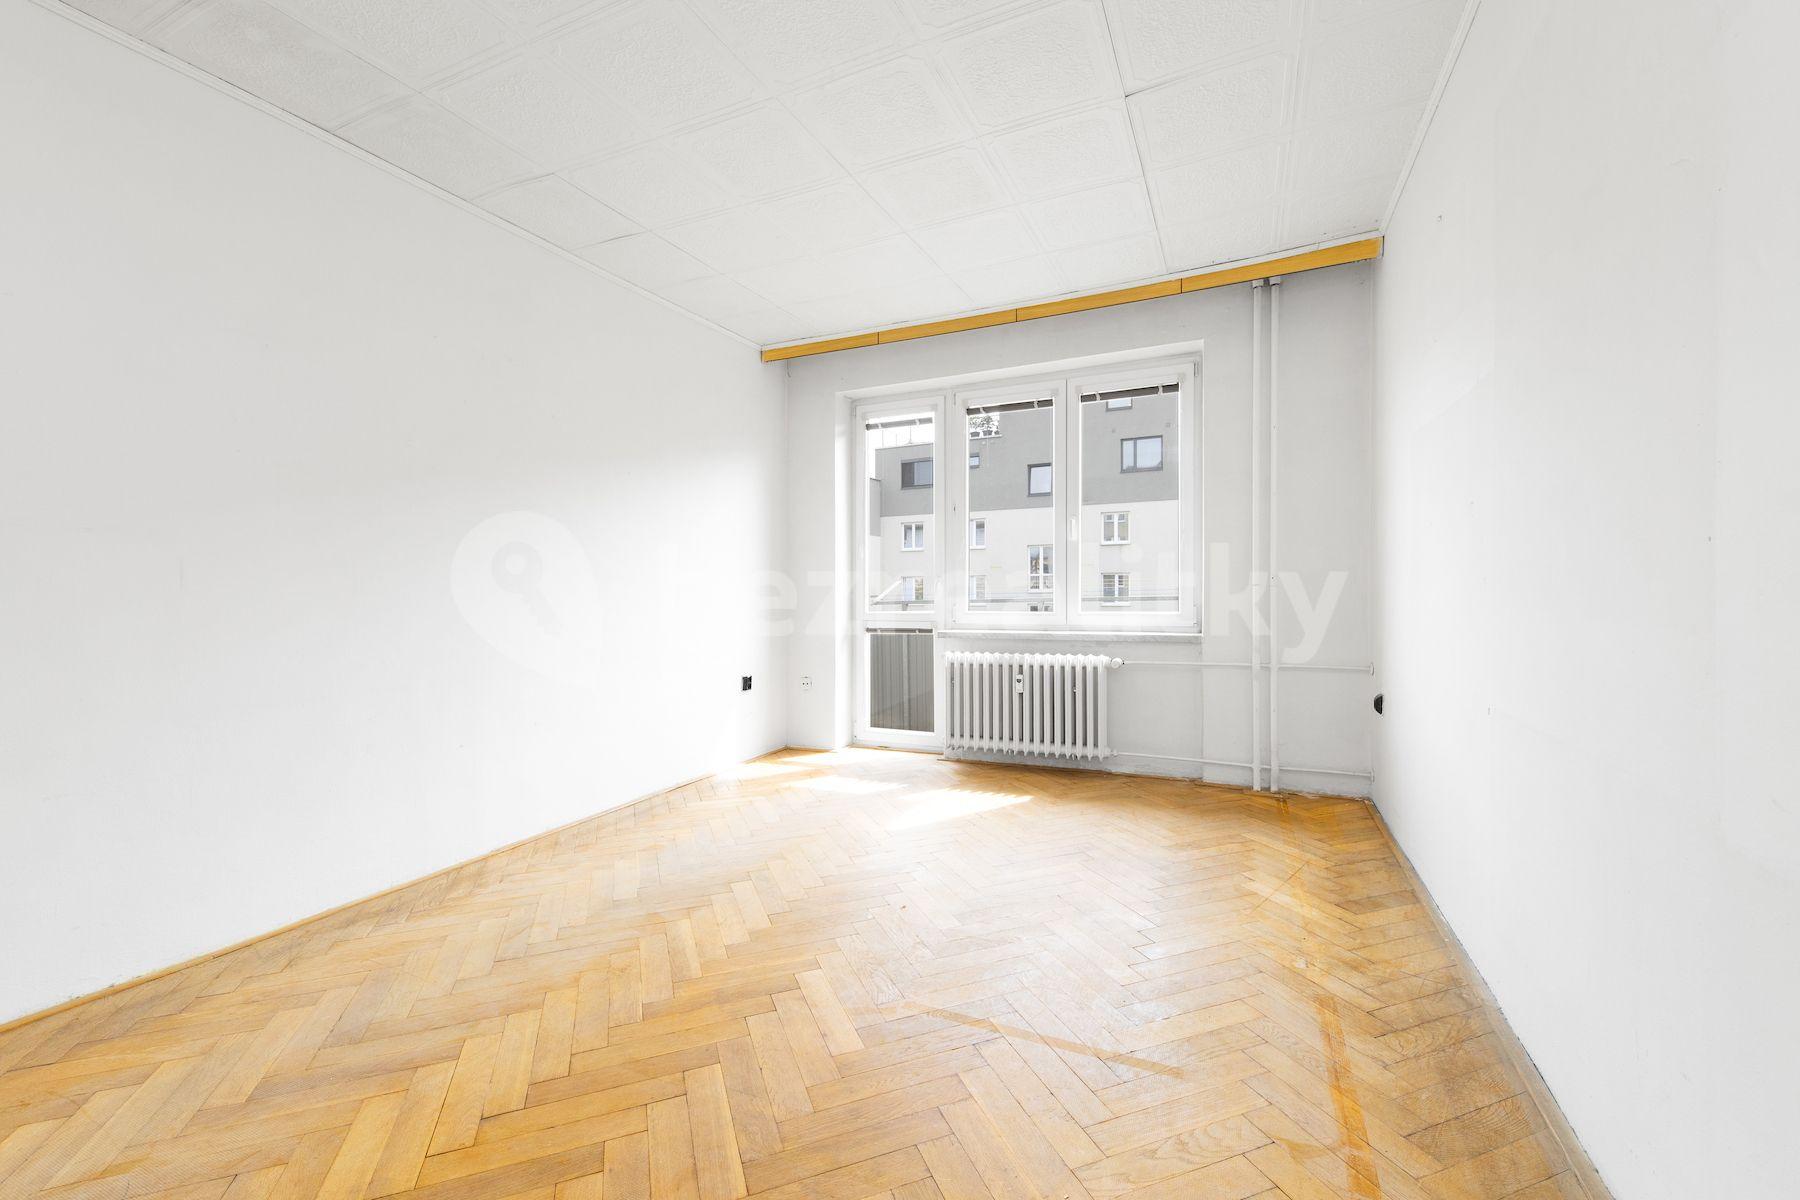 2 bedroom flat for sale, 57 m², Hlinky, Brno, Jihomoravský Region